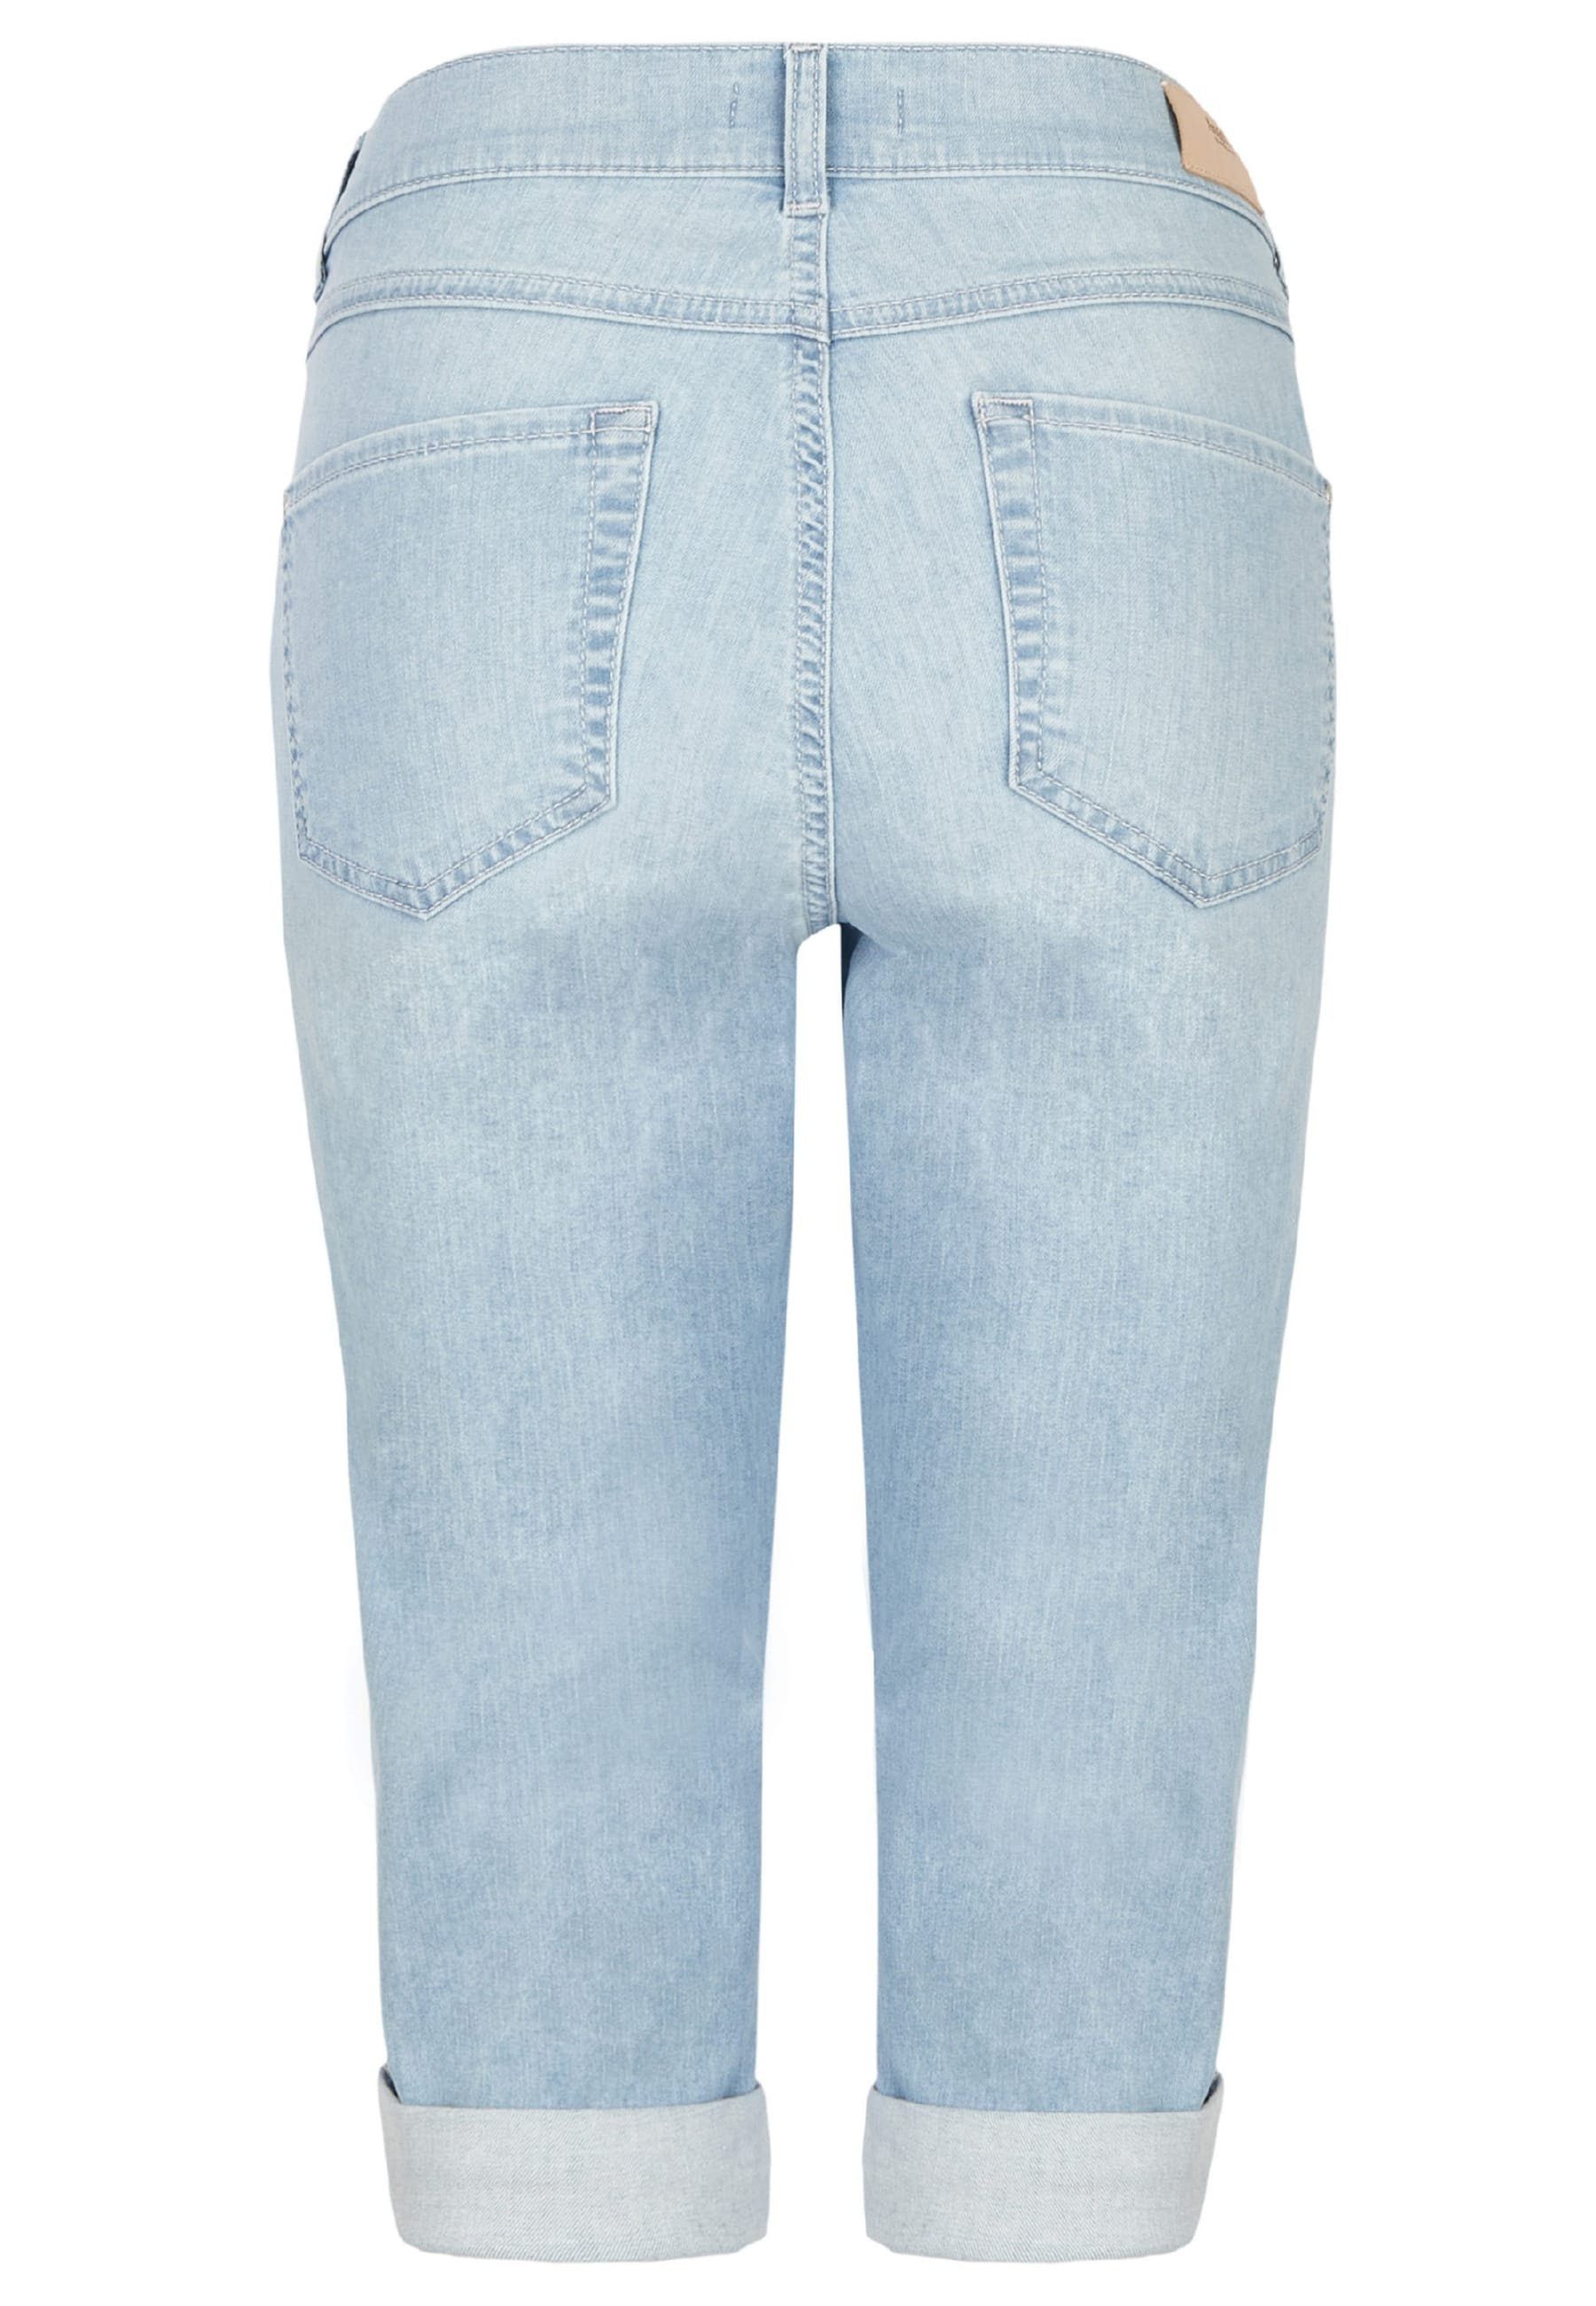 ANGELS 5-Pocket-Jeans Jeans mit mit Capri Used-Look TU hellblau Label-Applikationen